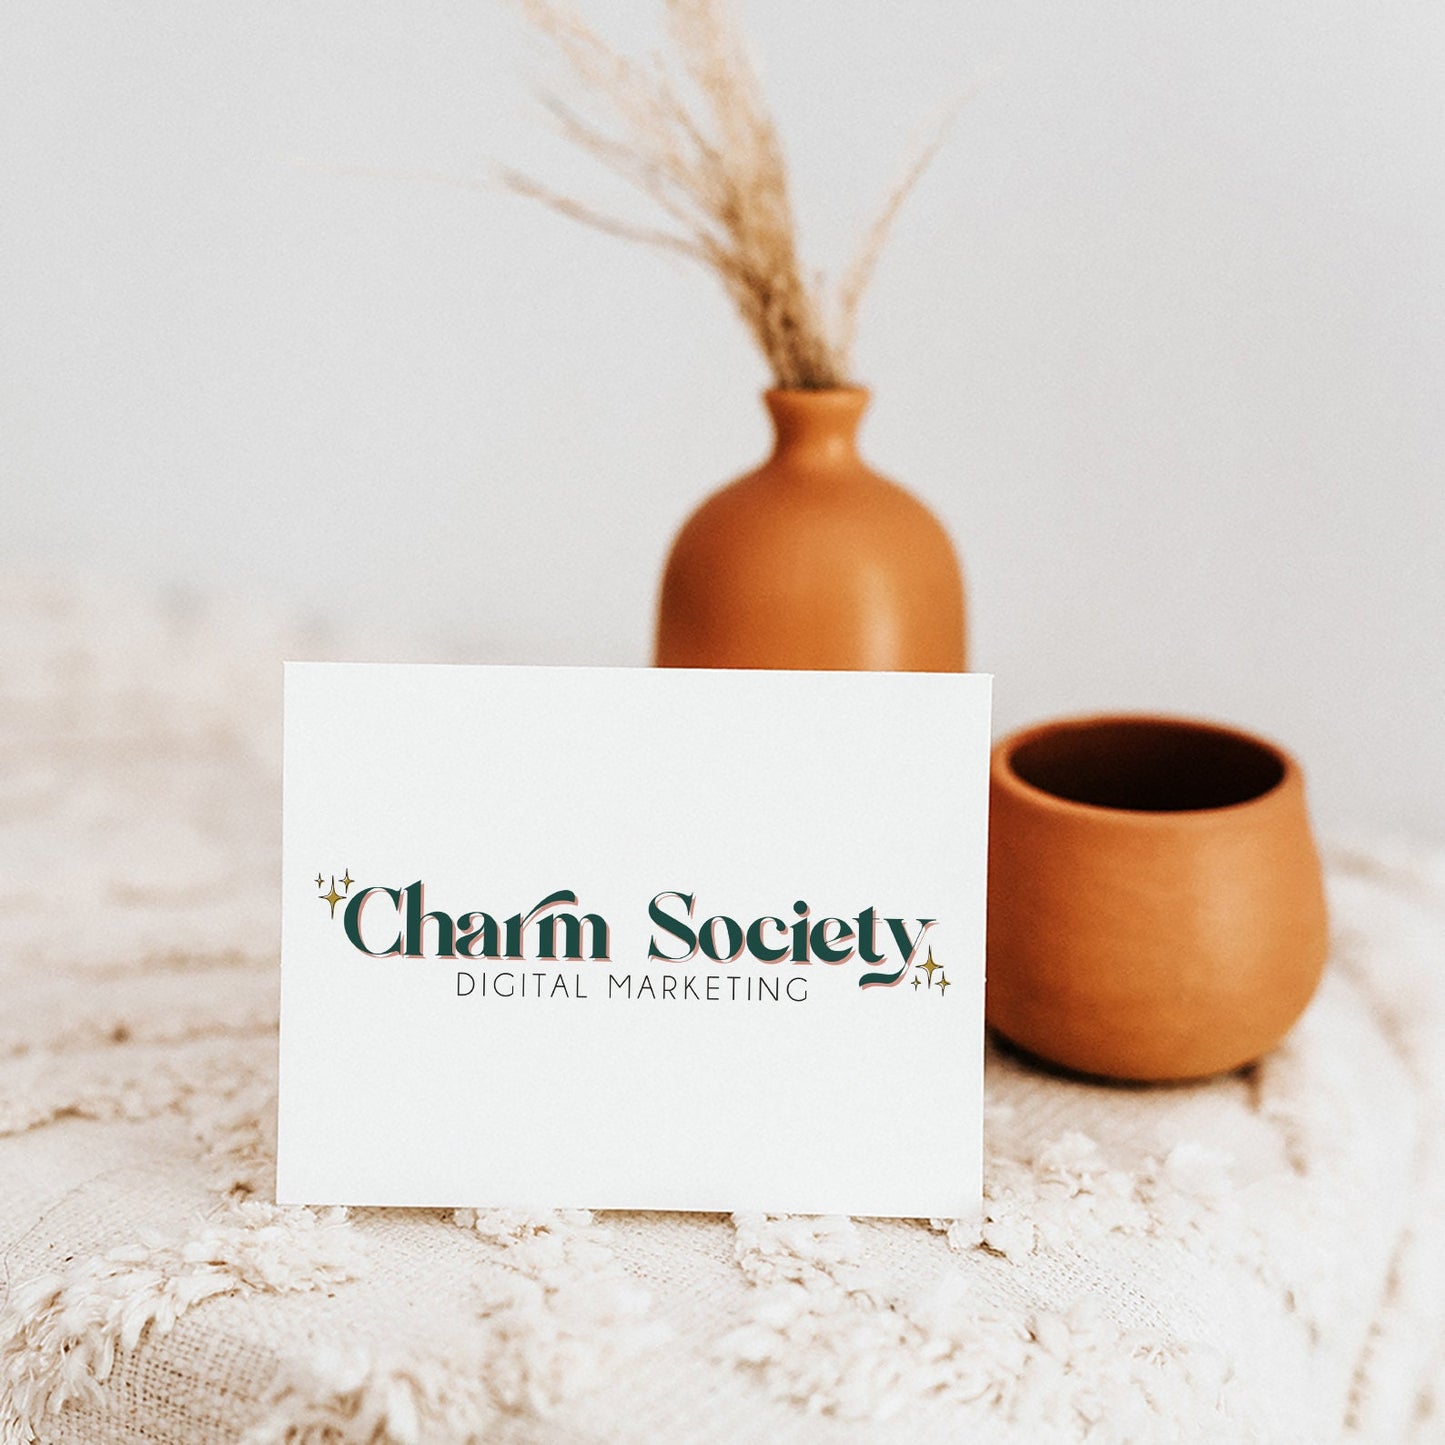 Charm Society | Premade Logo Design | Retro Boho, Mid Century, Sparkle, Modern Bohemian